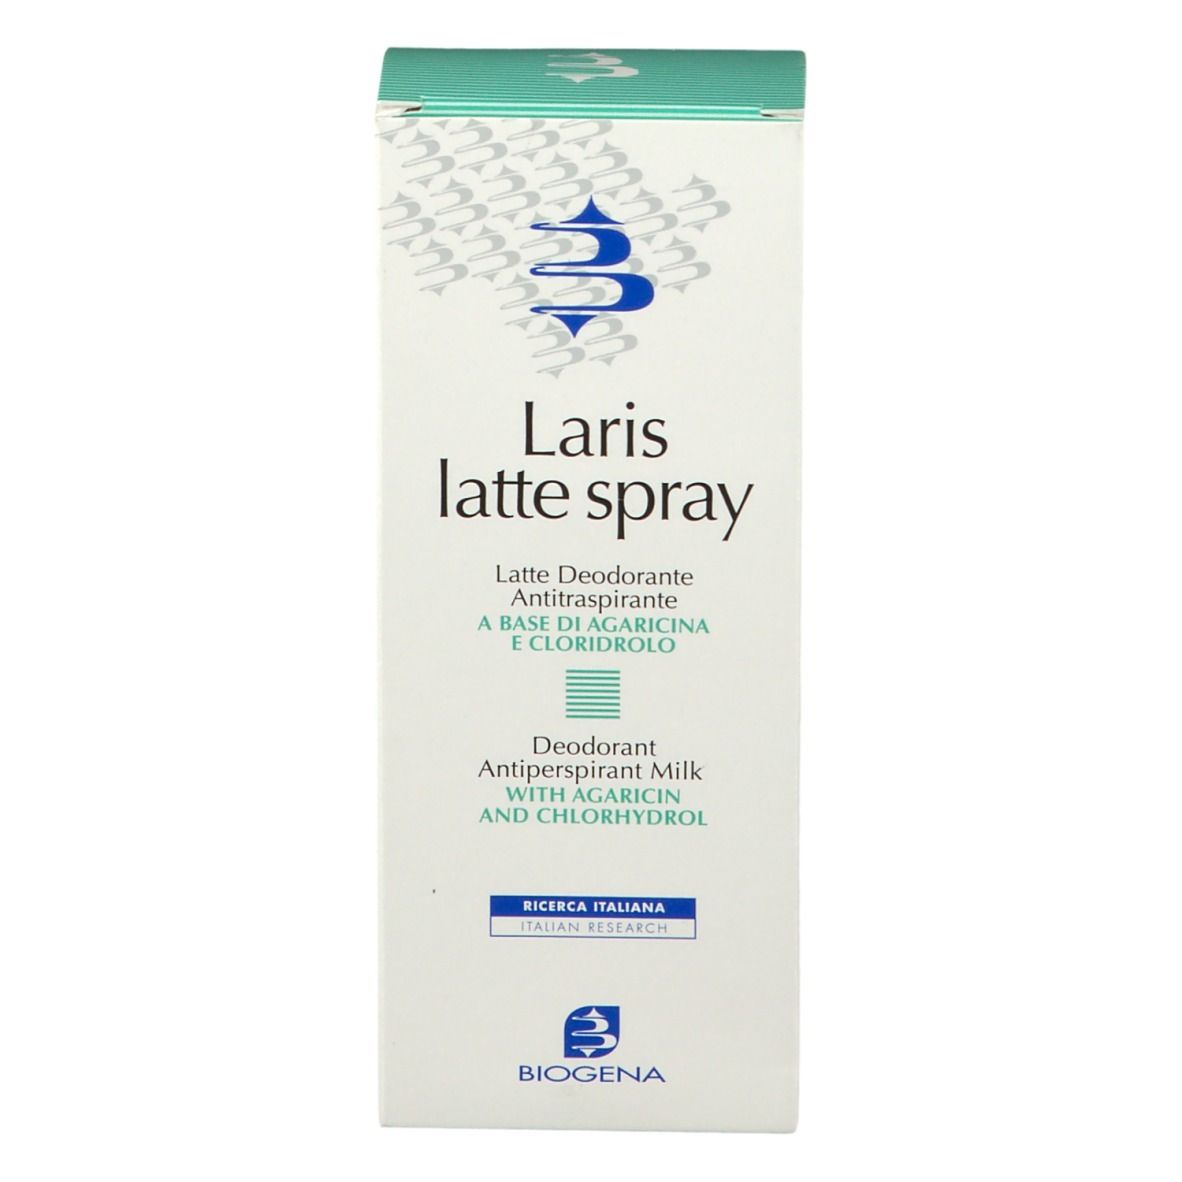 Laris Latte Spray Deodorante Antitraspirante